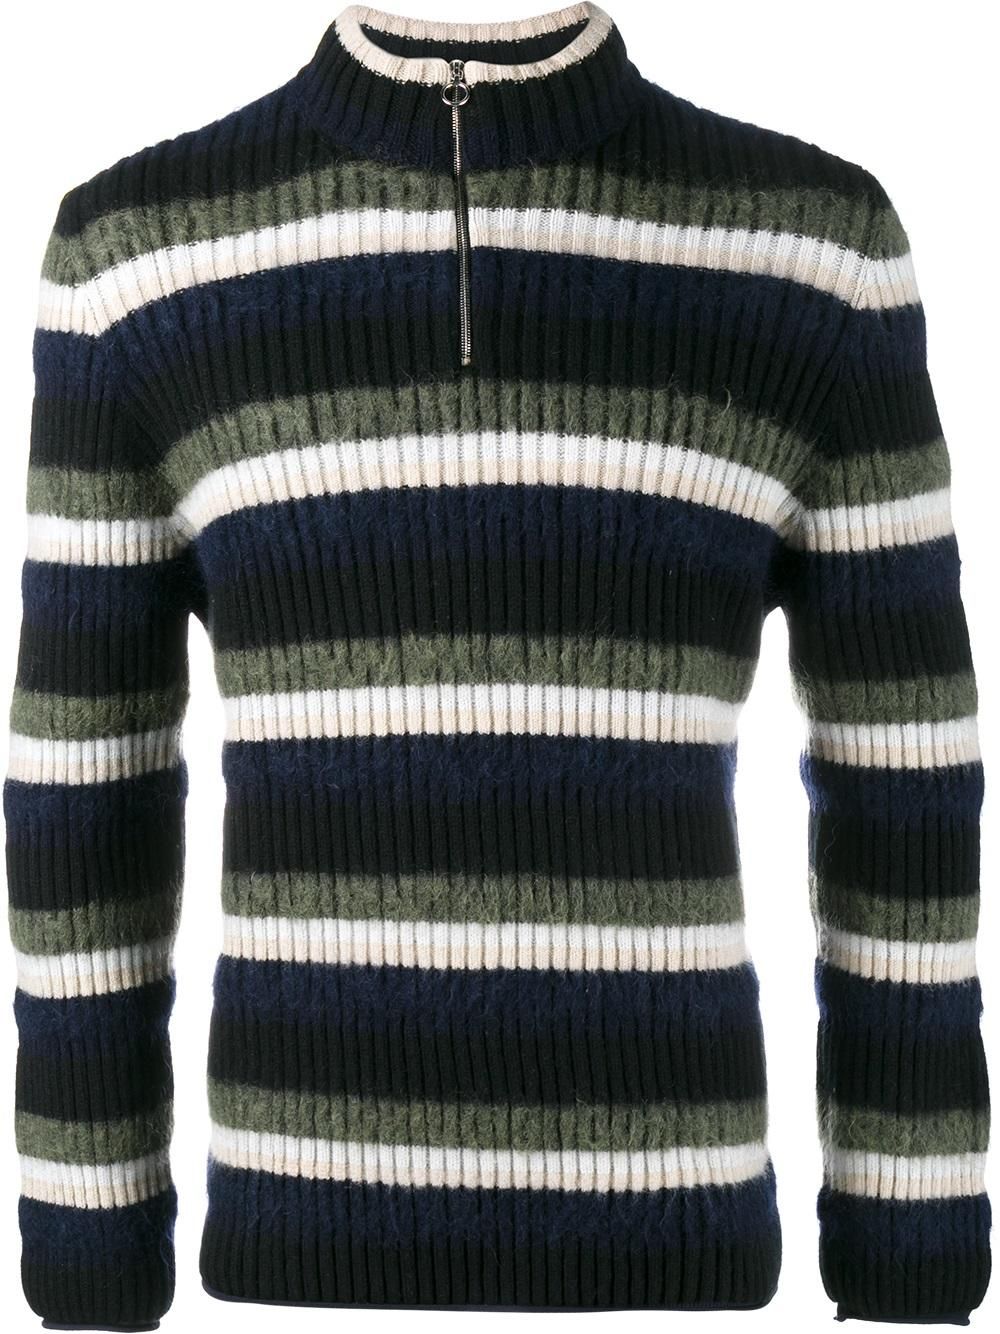 Suéter jersey de punto Sweater chaqueta de punto motivo capucha ZIP señores bolf Classic 